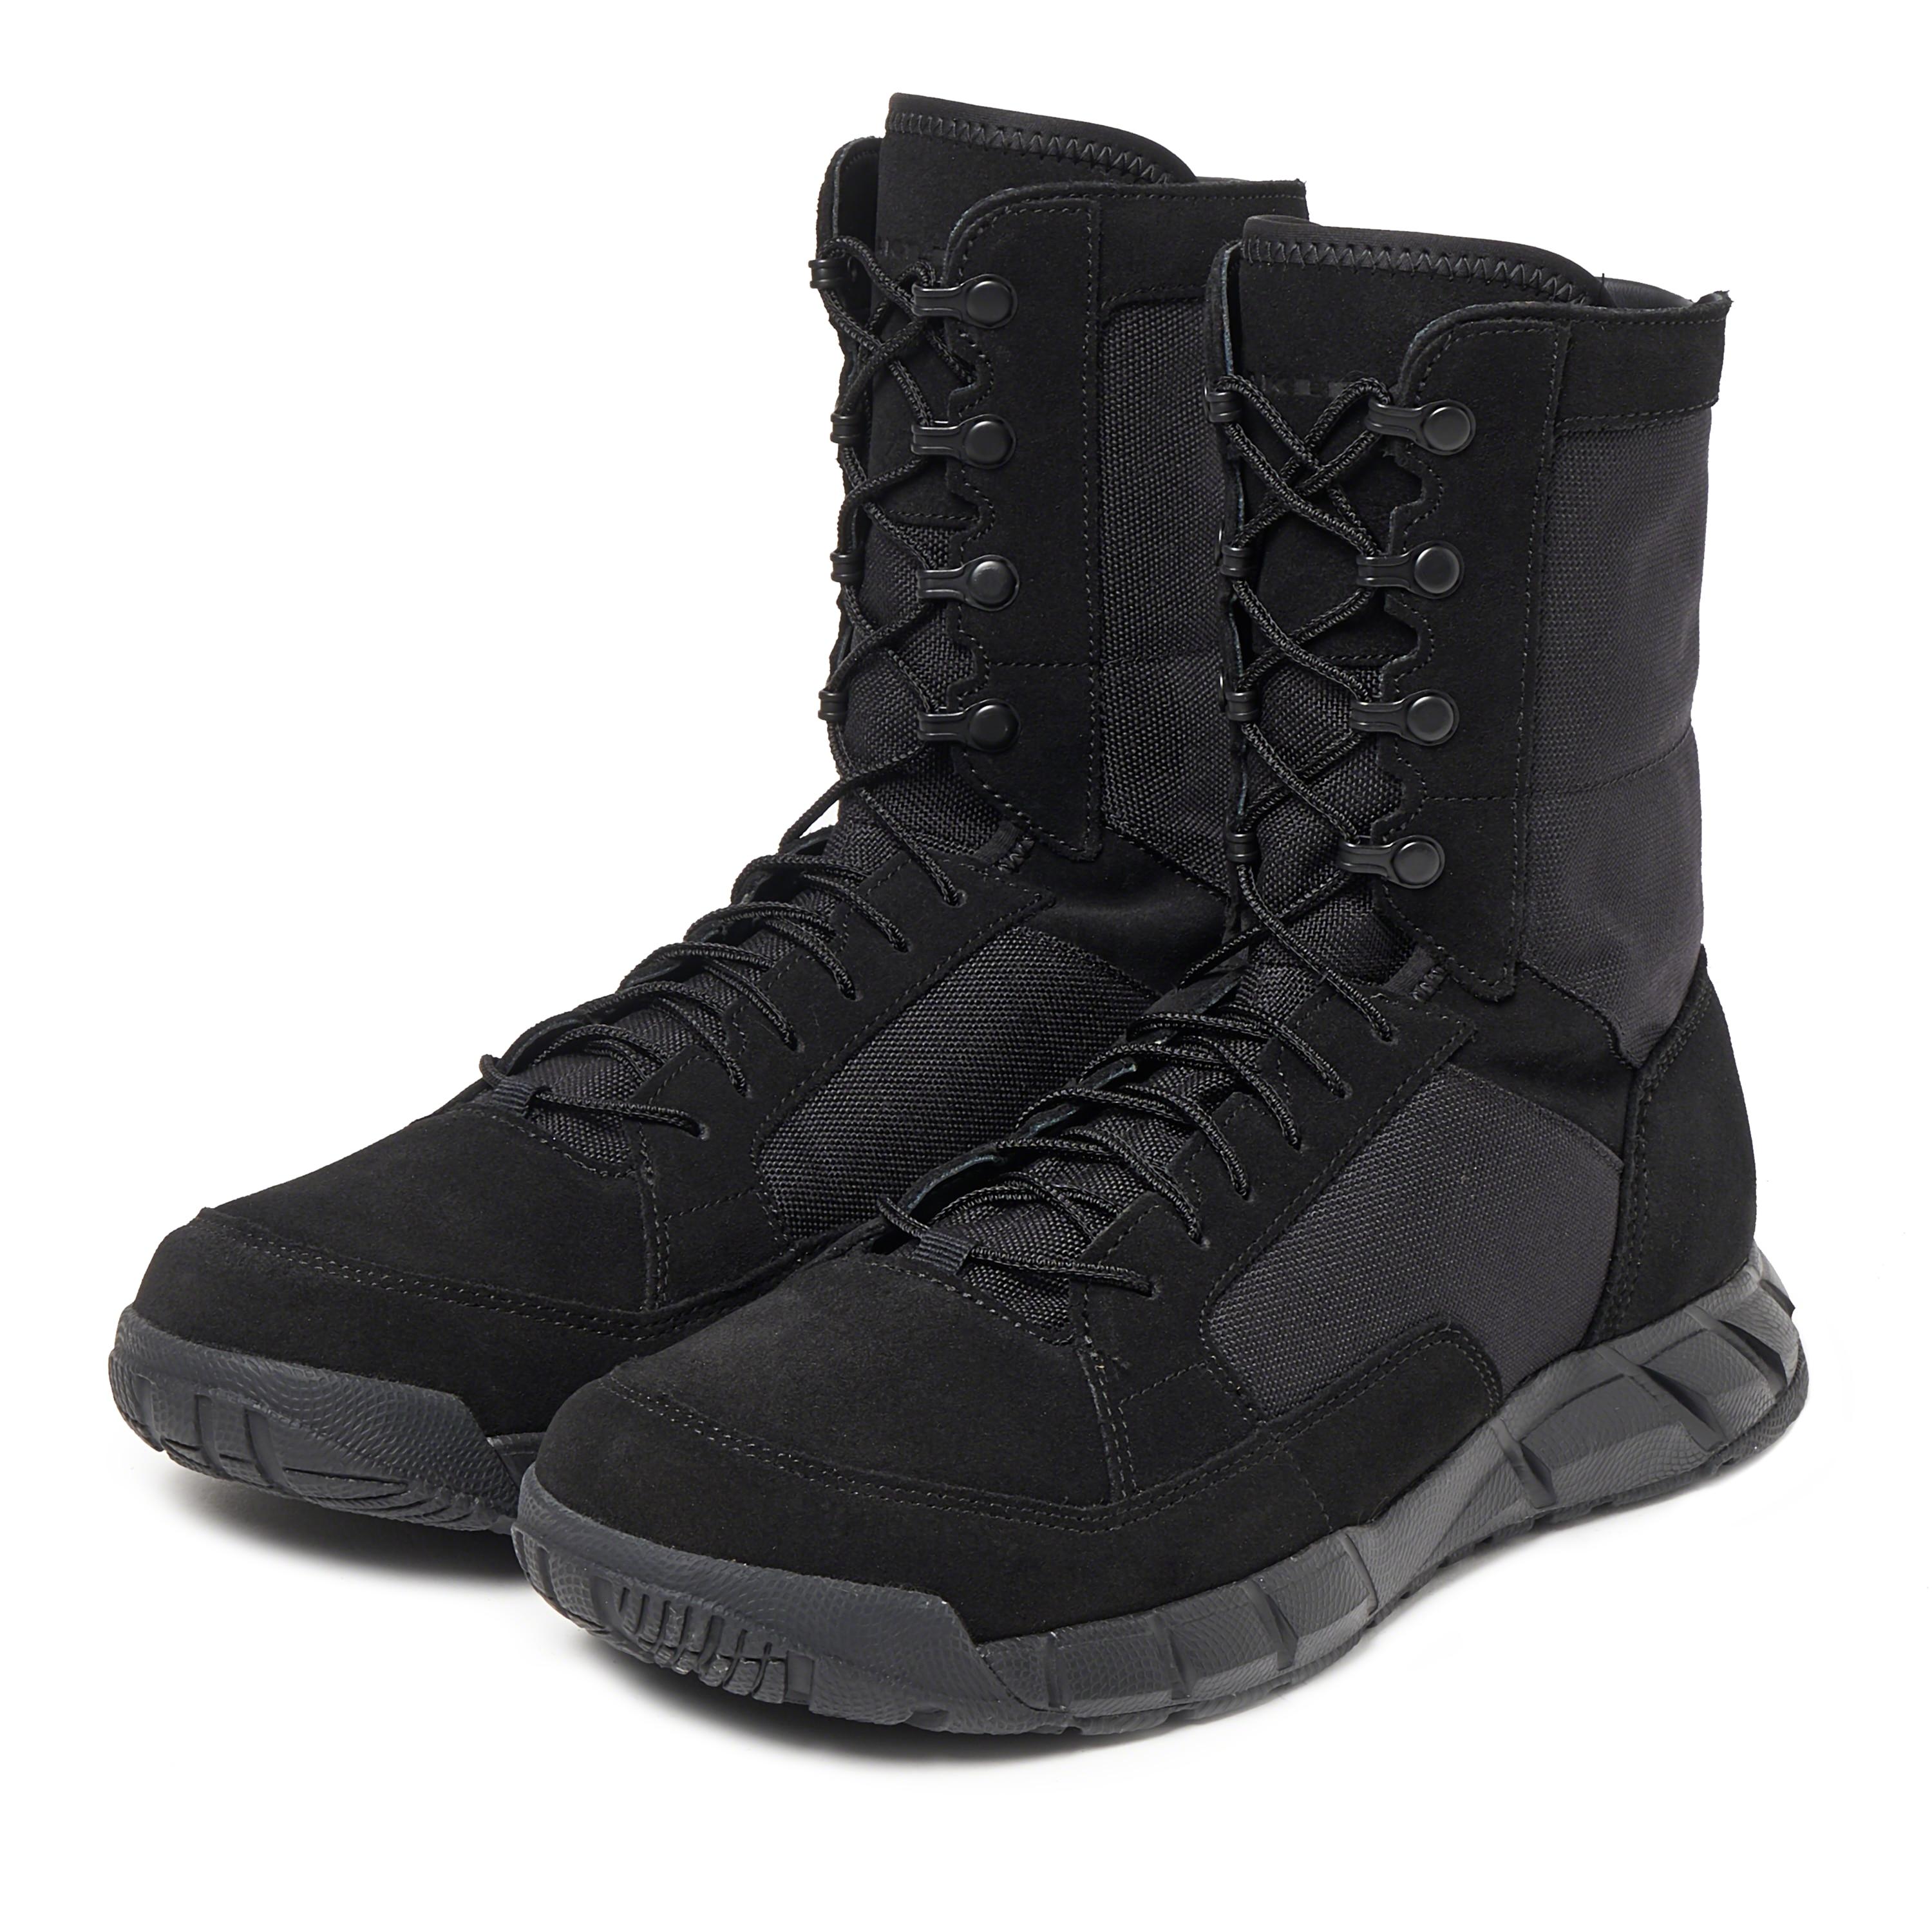 Oakley Synthetic Light Assault Boot 2 in Black for Men - Lyst